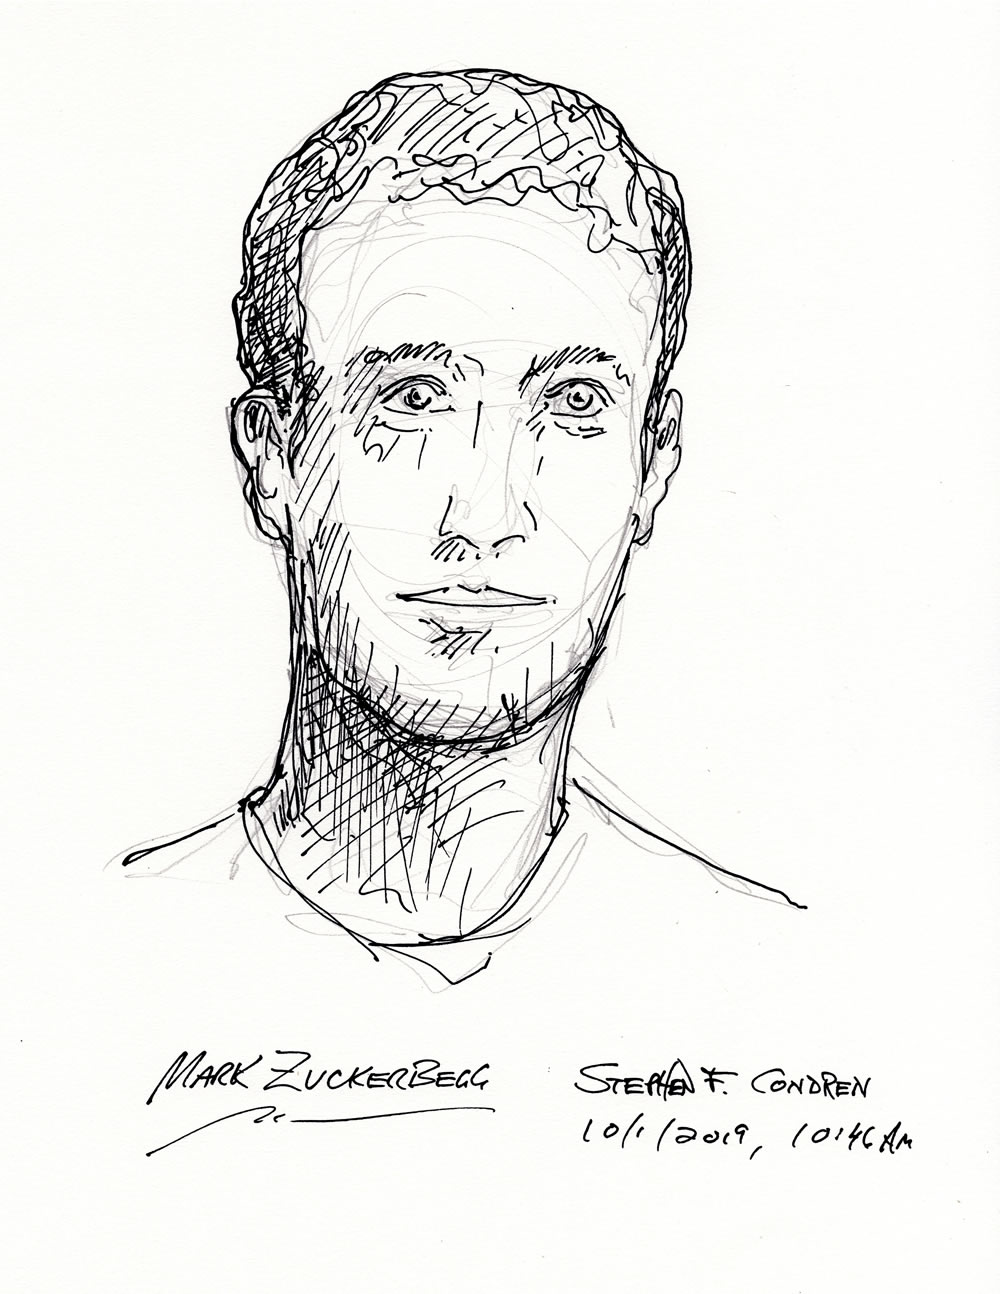 Mark Zuckerberg #415Z pen & ink drawing by artist Stephen F. Condren.